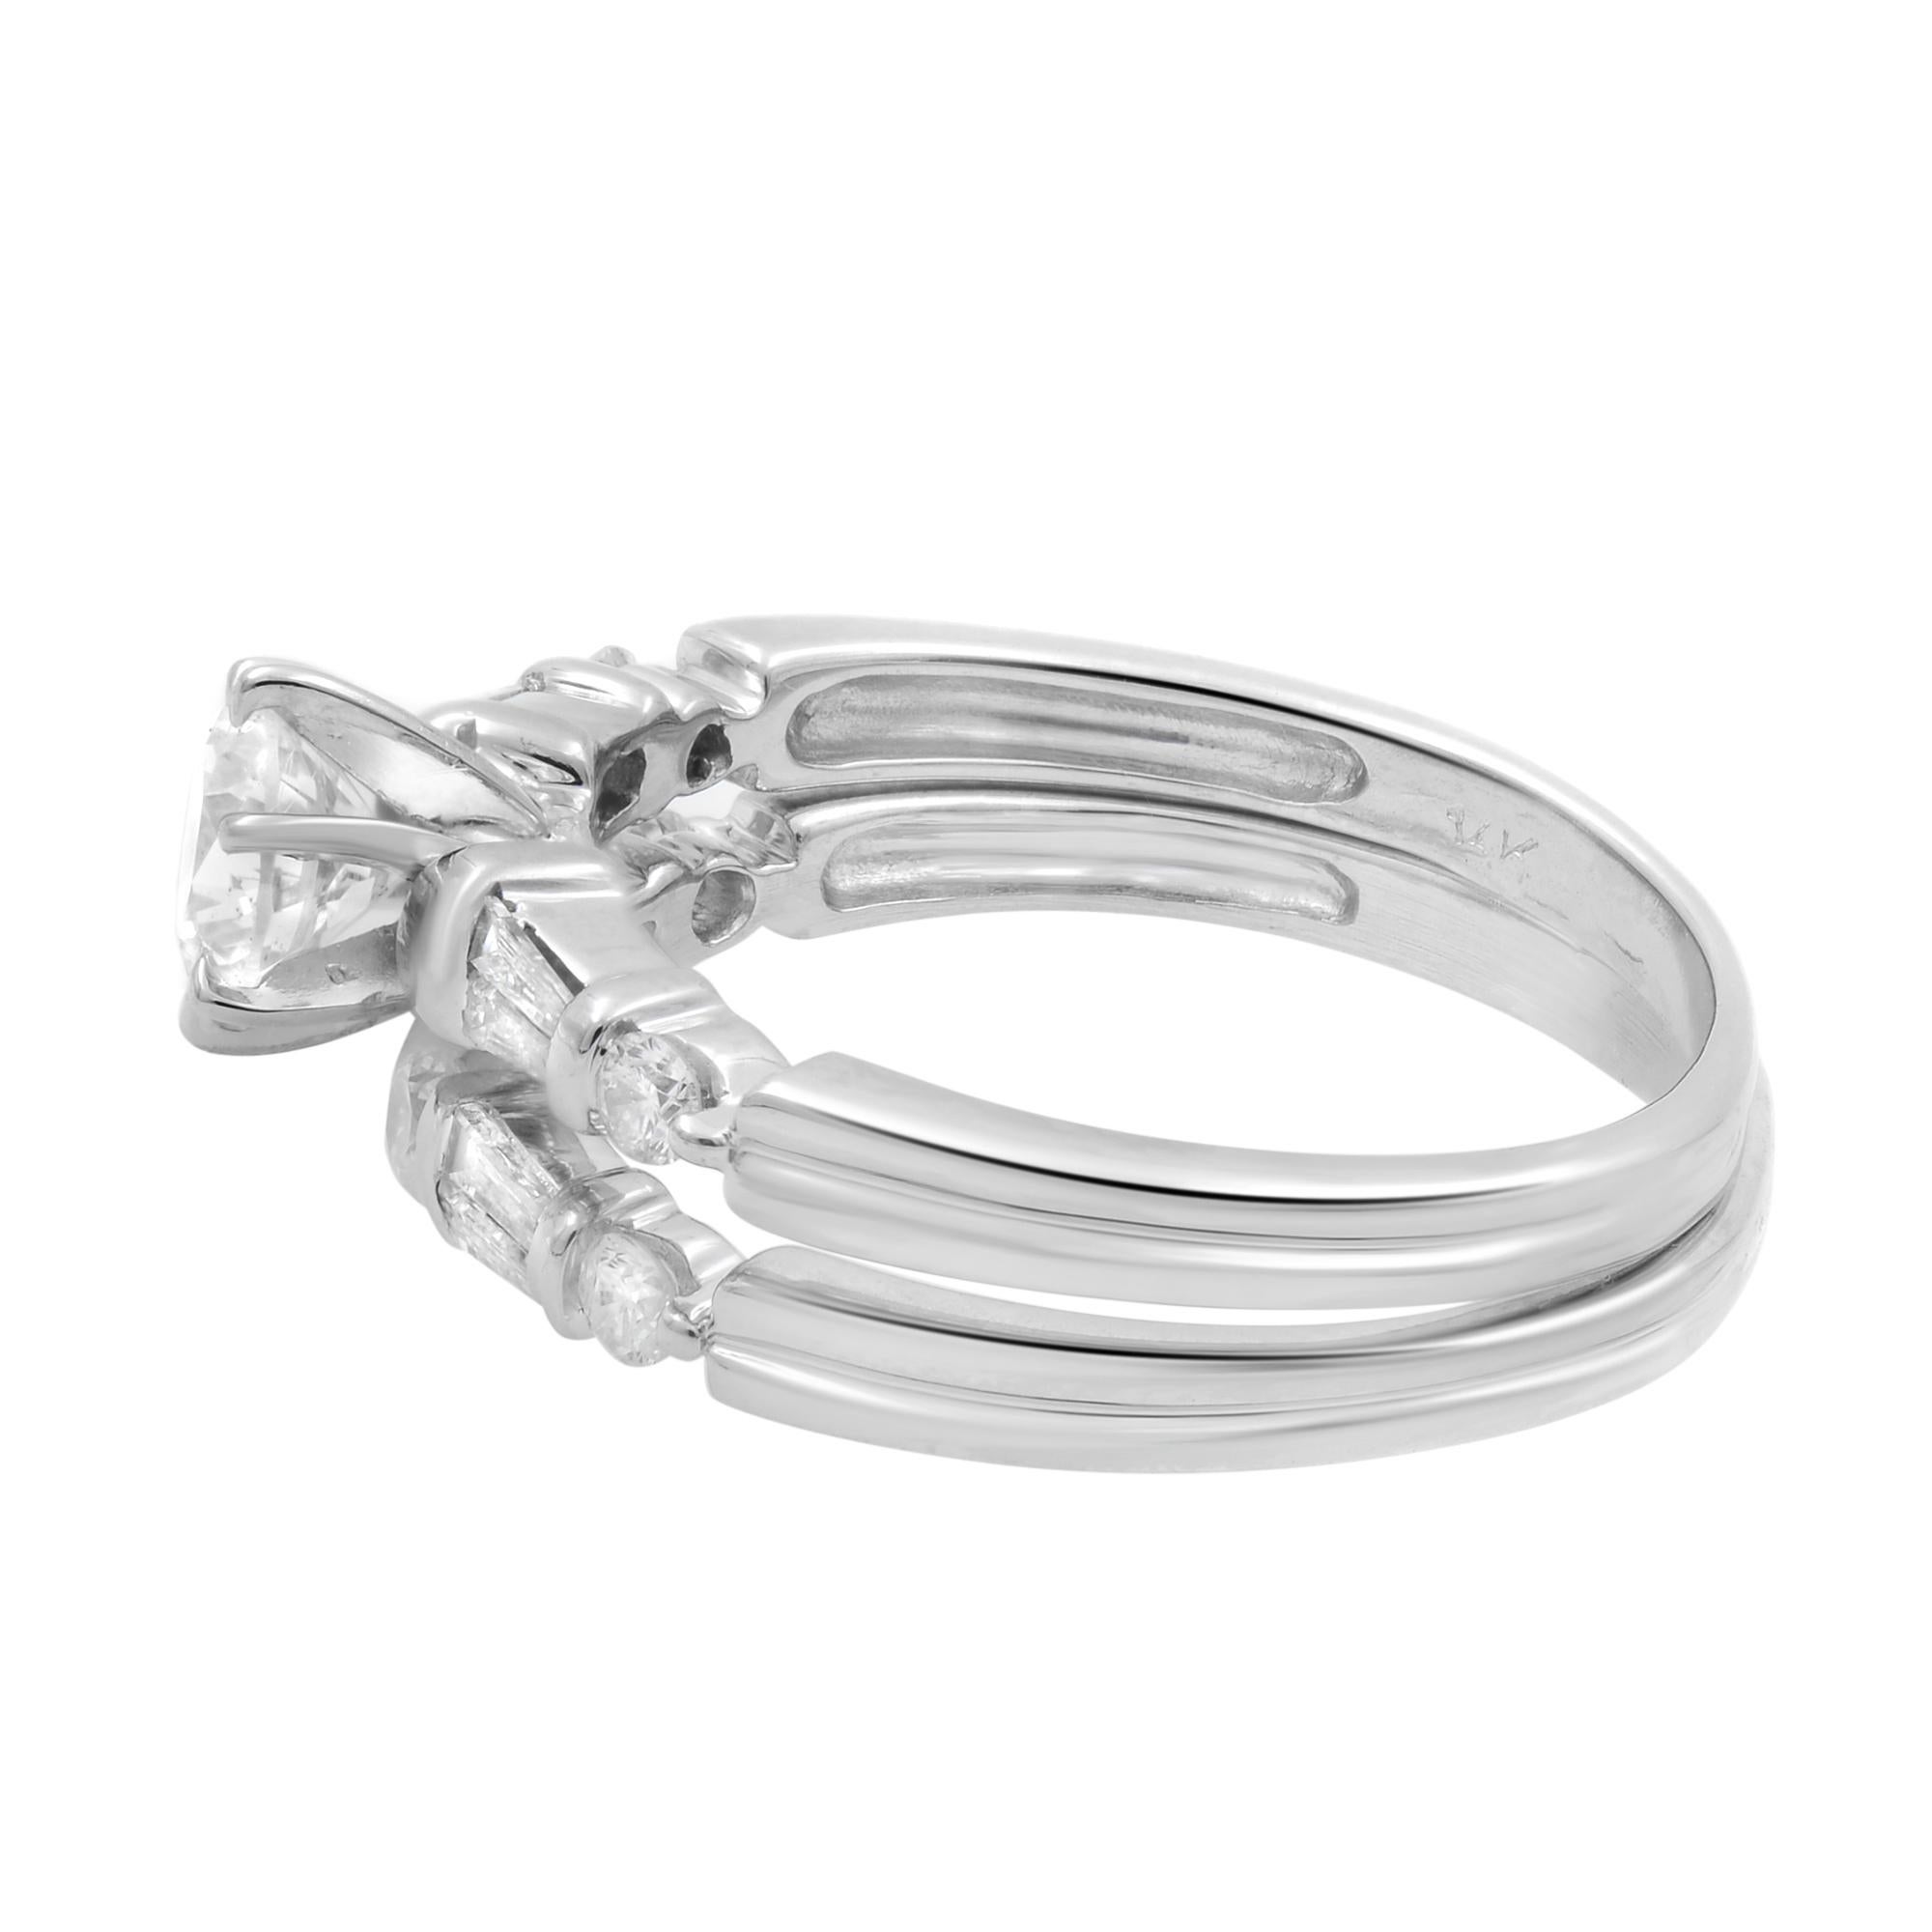 Round Cut Rachel Koen 1.25Cttw Diamond Engagement Ring Set 14K White Gold Size 8 For Sale